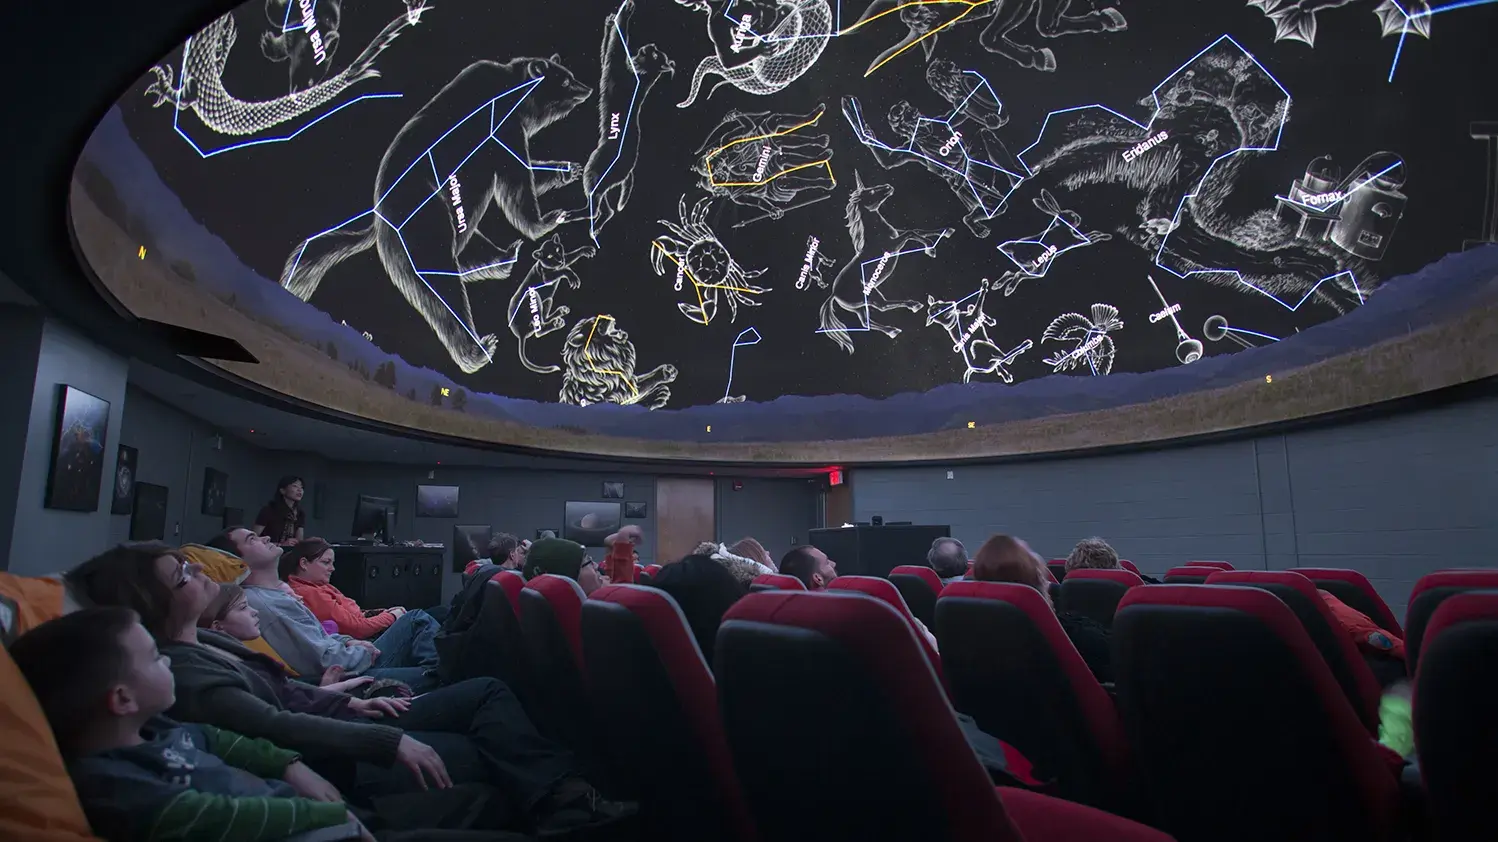 theater seating inside a planetarium